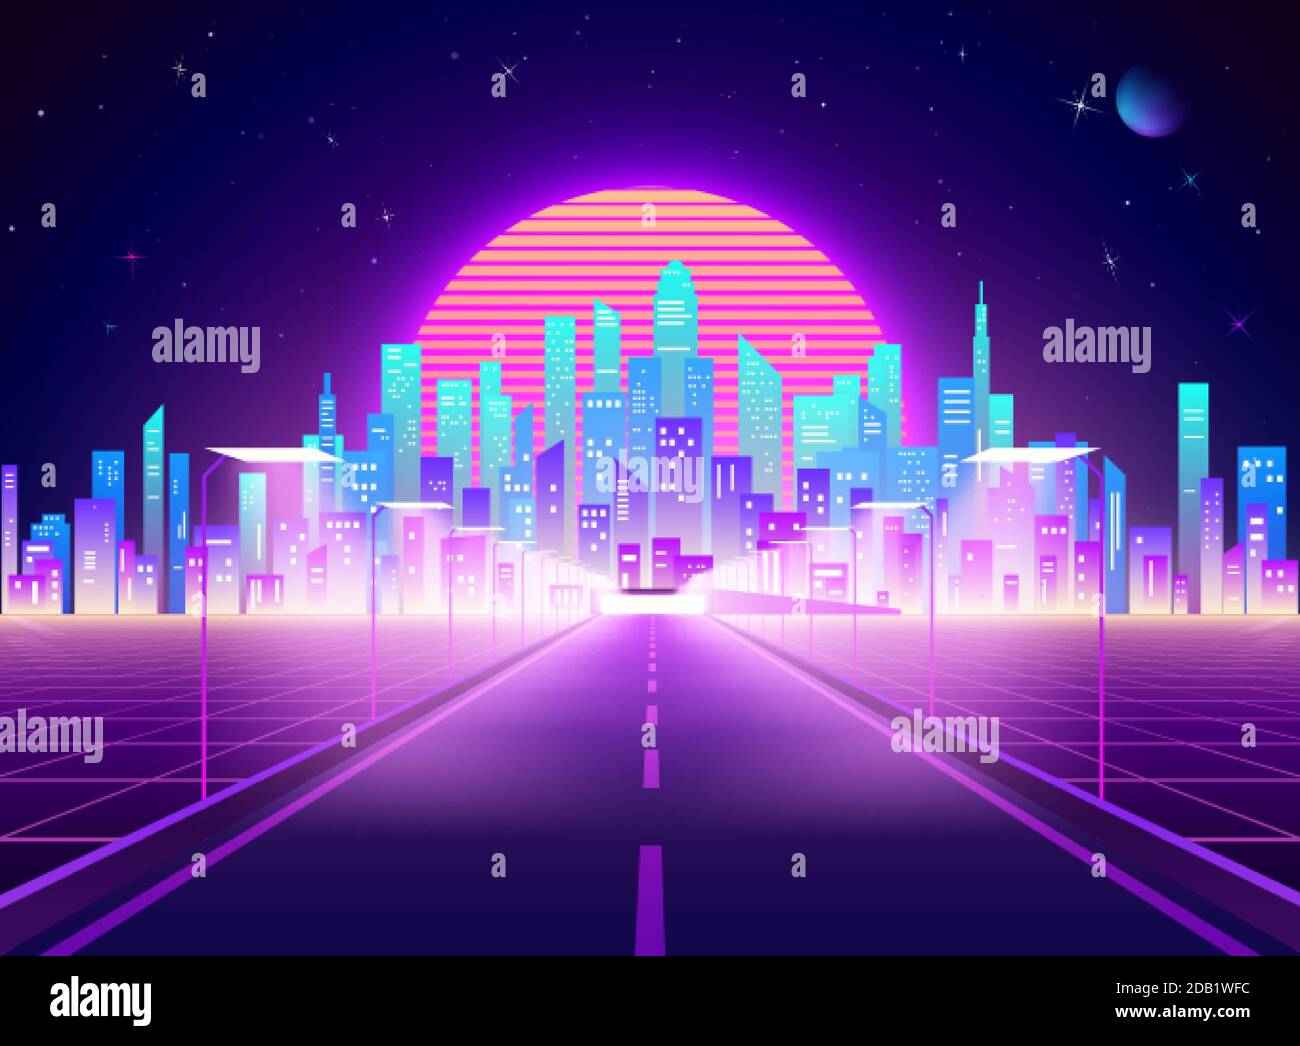 Highway to Cyberpunk futuristic town. Neon retro city landscape. Sci-fi background abstract digital architecture. Vector illustration Stock Vector